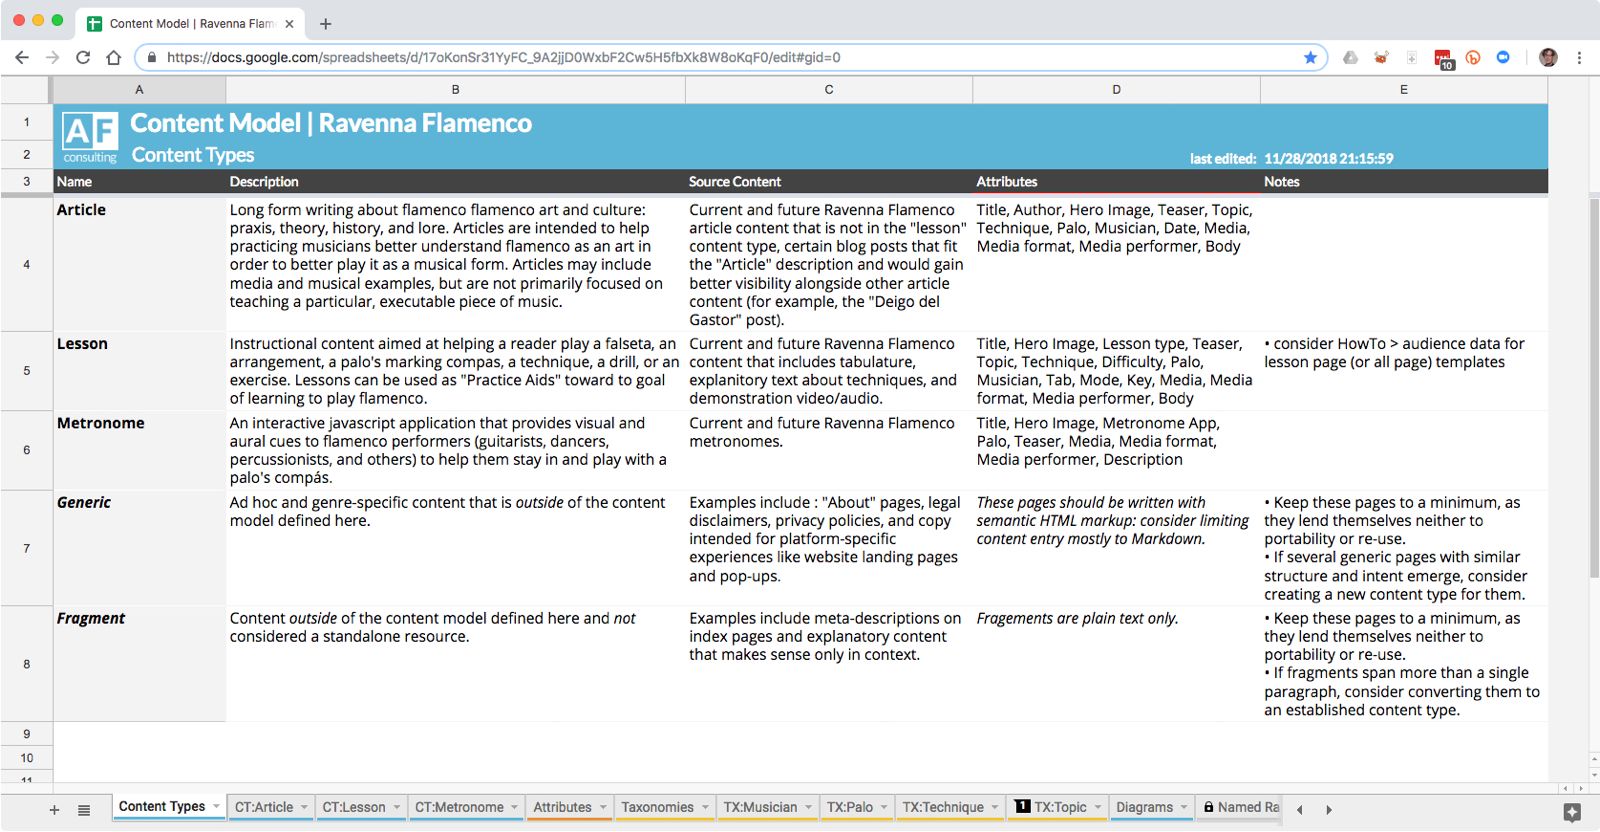 A screenshot of a spreadsheet depiction of the Ravenna Flamenco content model